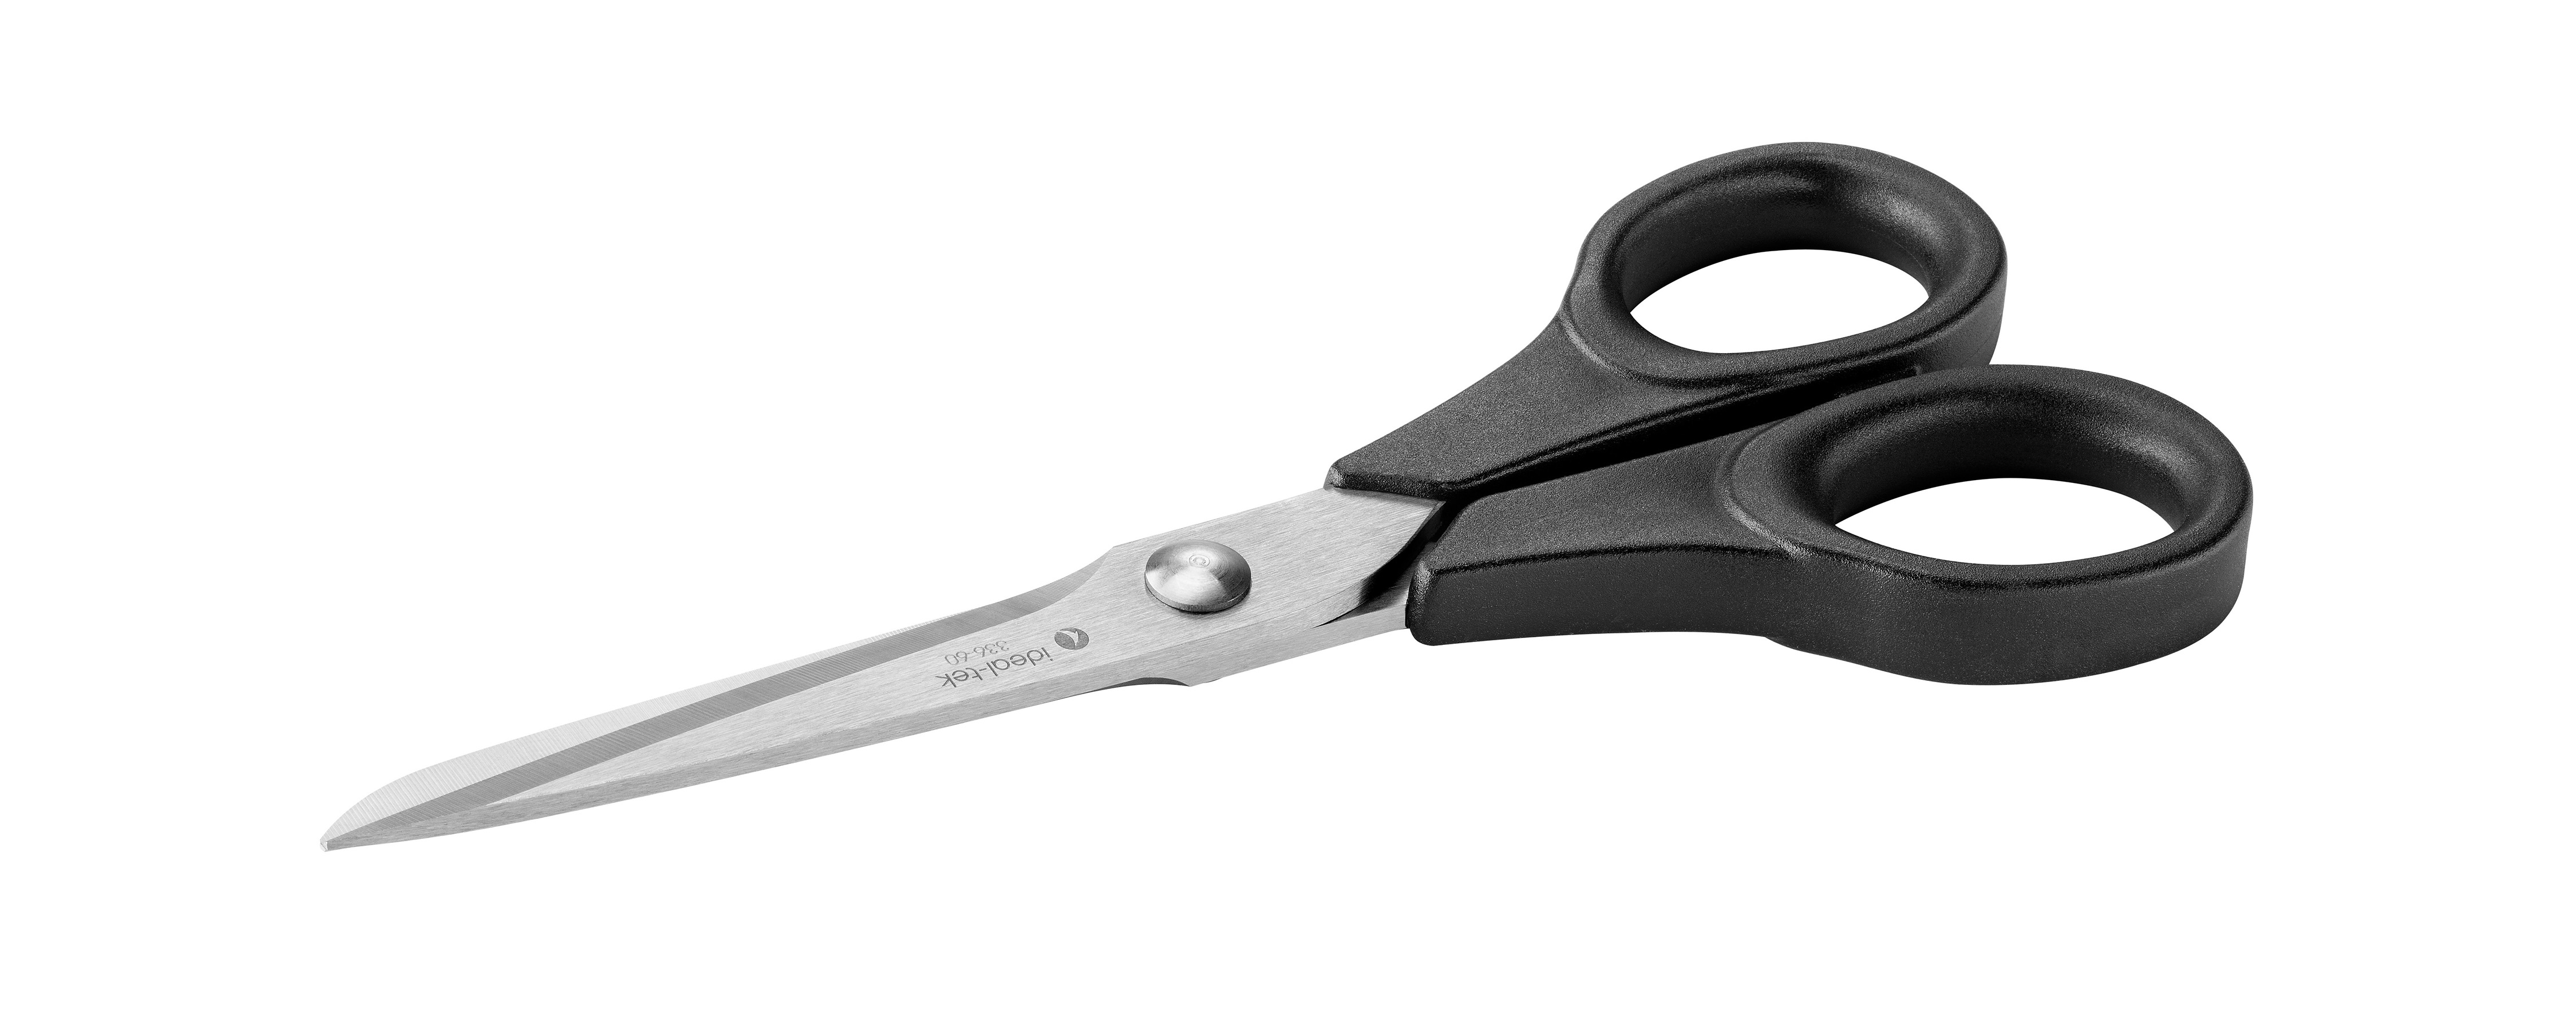 336-60.BK - Industrial Scissors